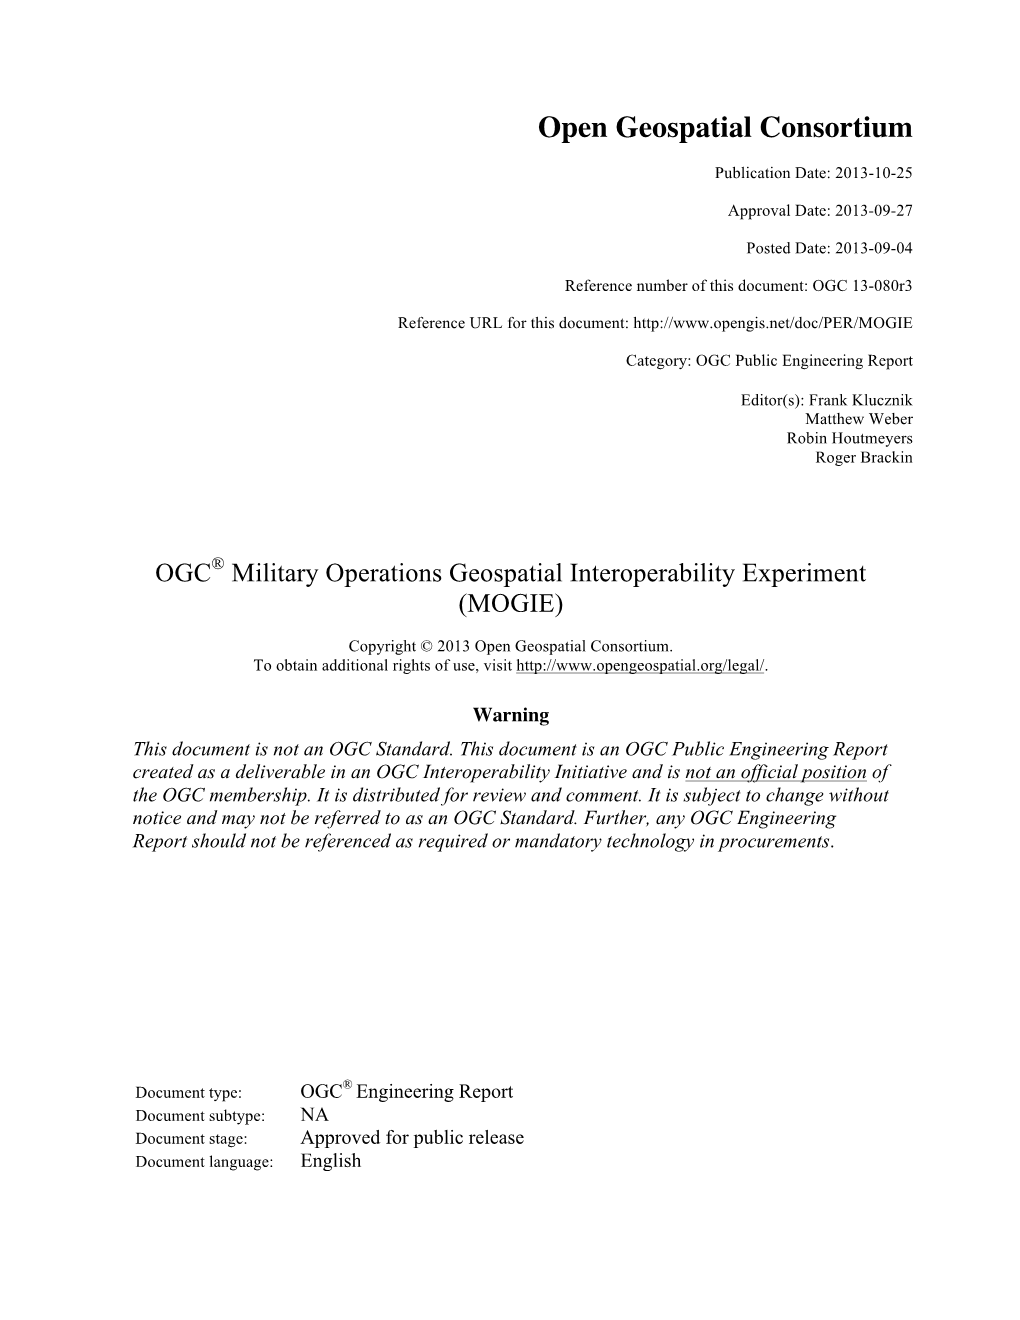 OGC® Military Operations Geospatial Interoperability Experiment (MOGIE)